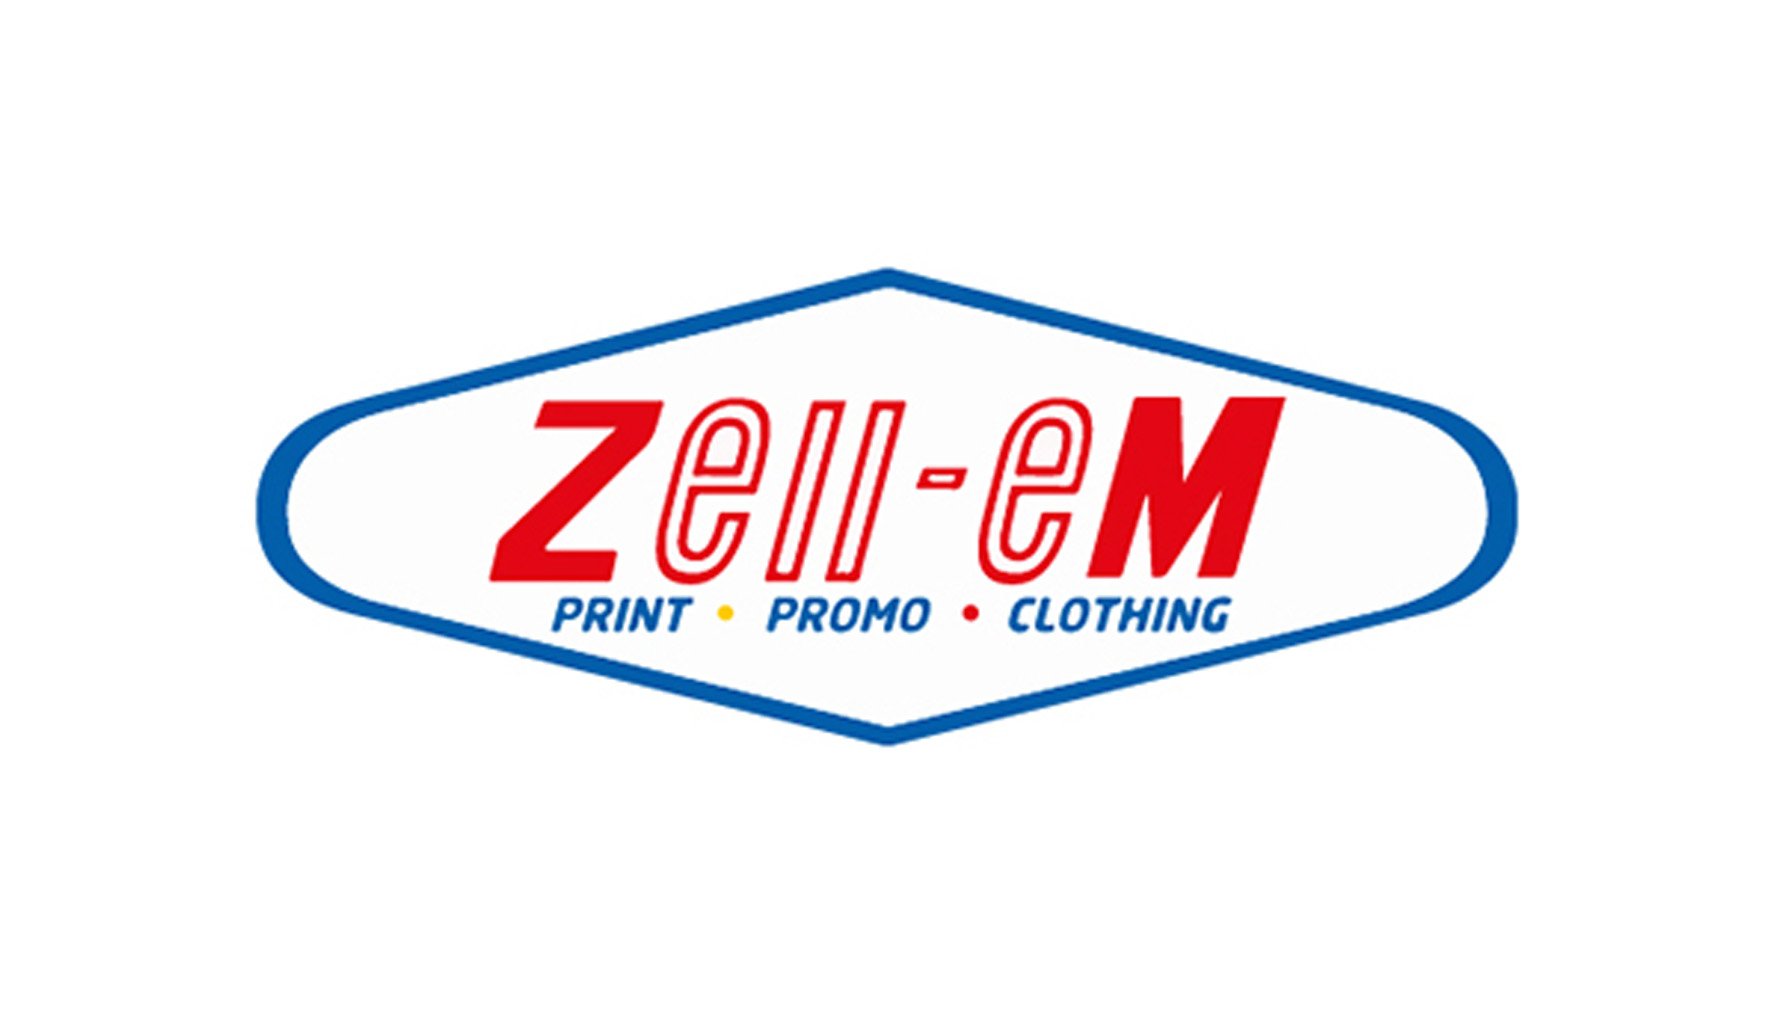 Zell-Em Print Promo Clothing